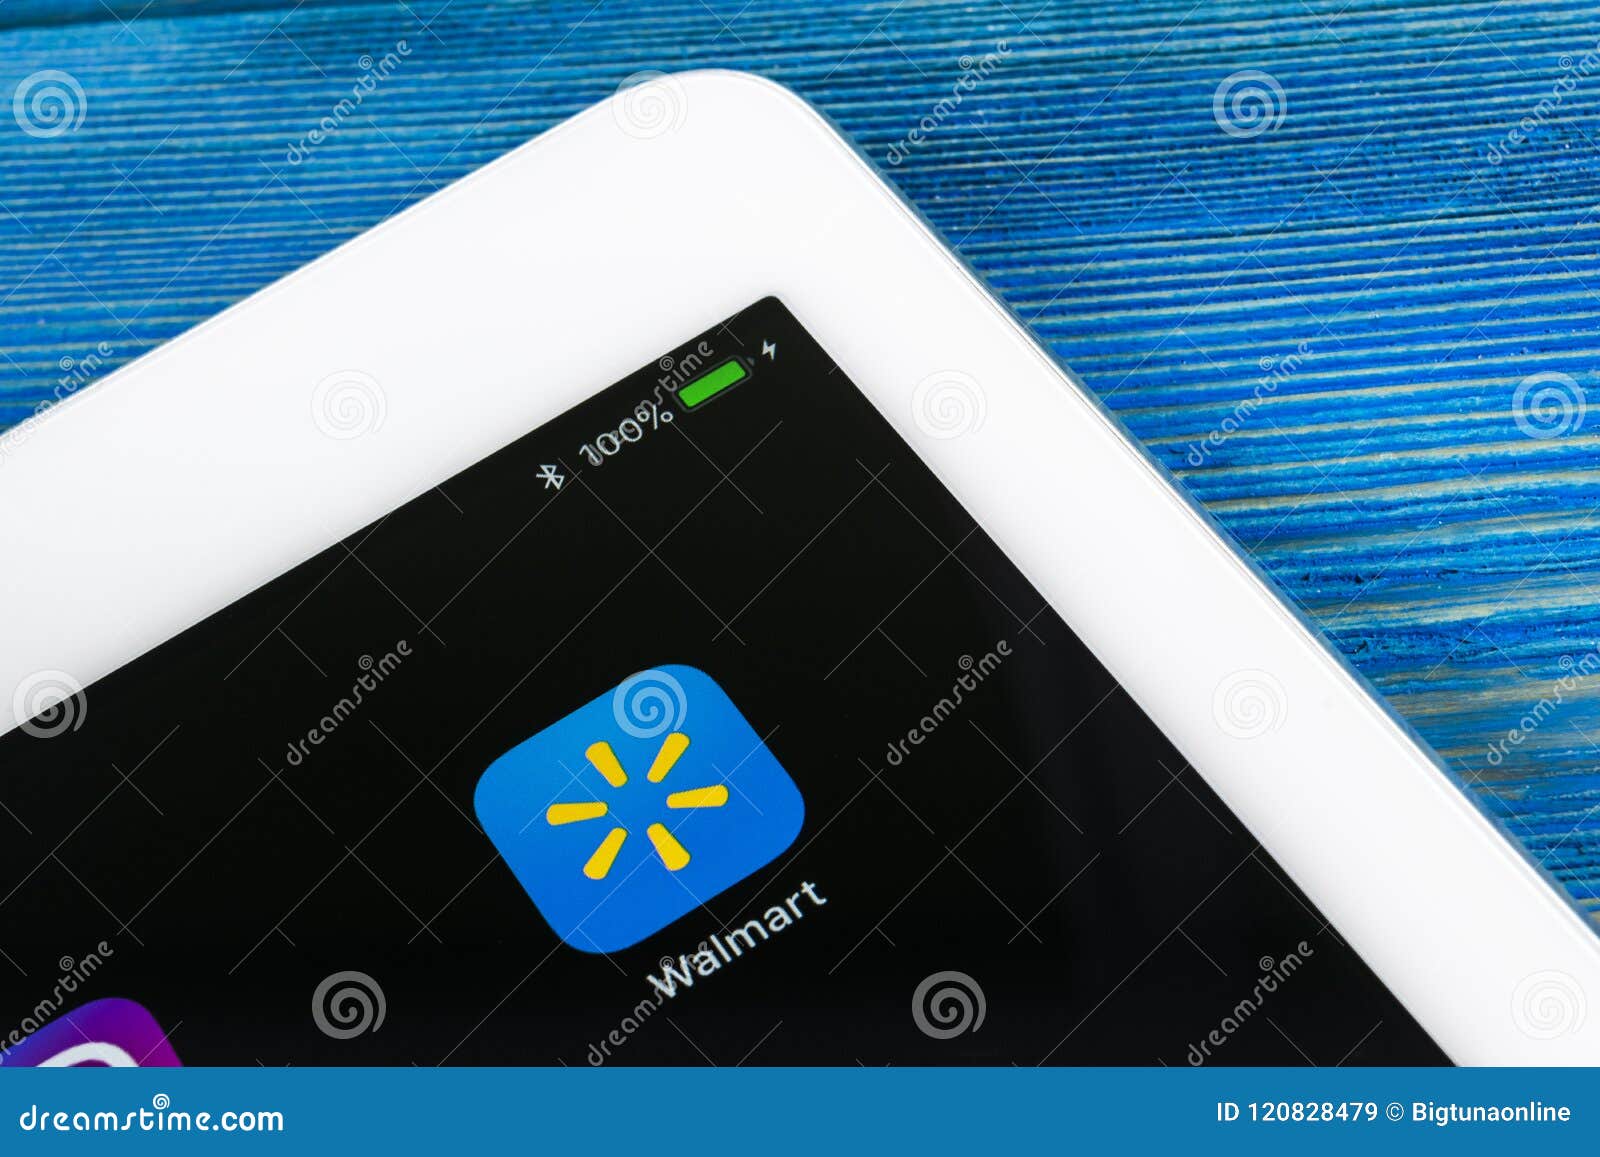 Walmart Application Icon On Apple IPad Pro Screen Close-up ...